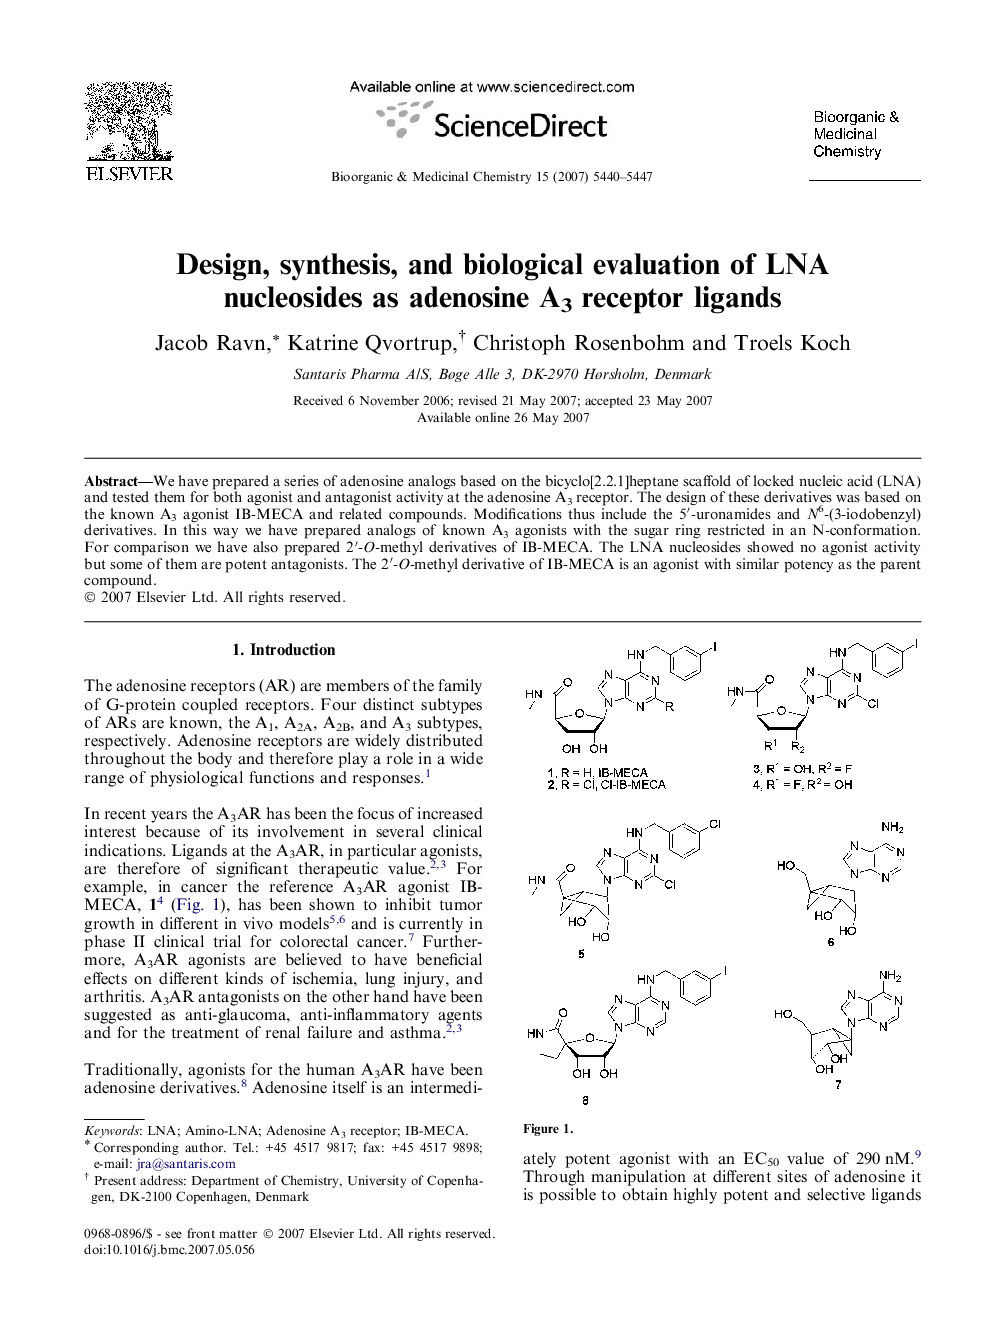 Design, synthesis, and biological evaluation of LNA nucleosides as adenosine A3 receptor ligands